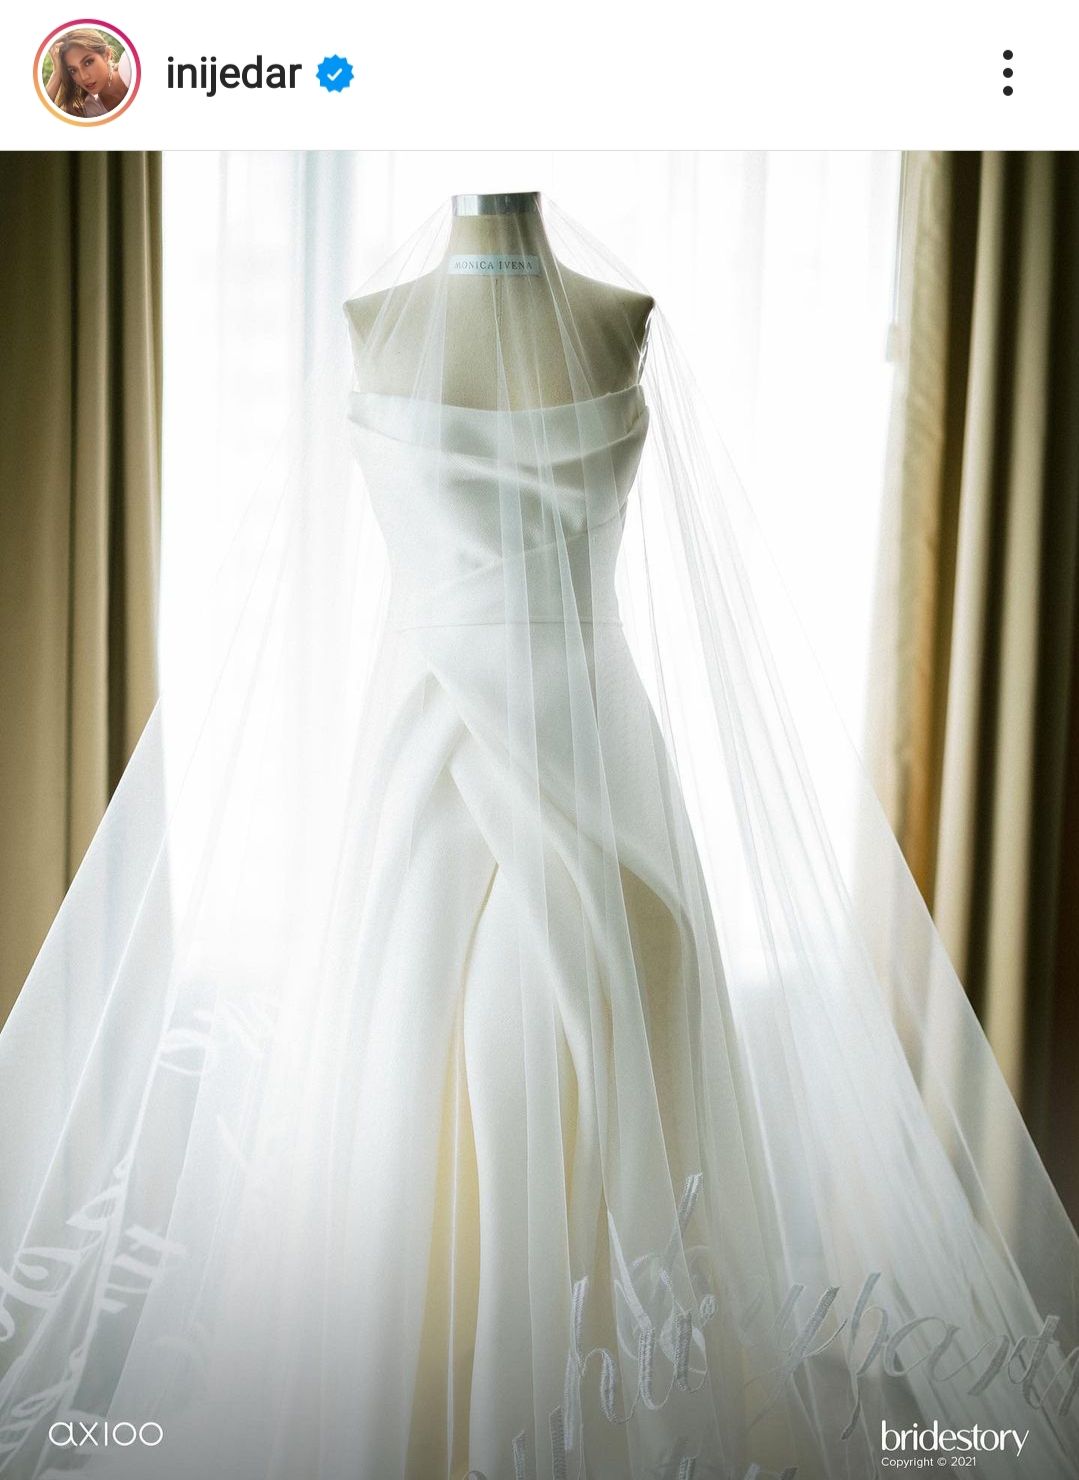 Gaun yang dikenakan Jessica Iskandar untuk pernikahannya, whimsical serta elegan.